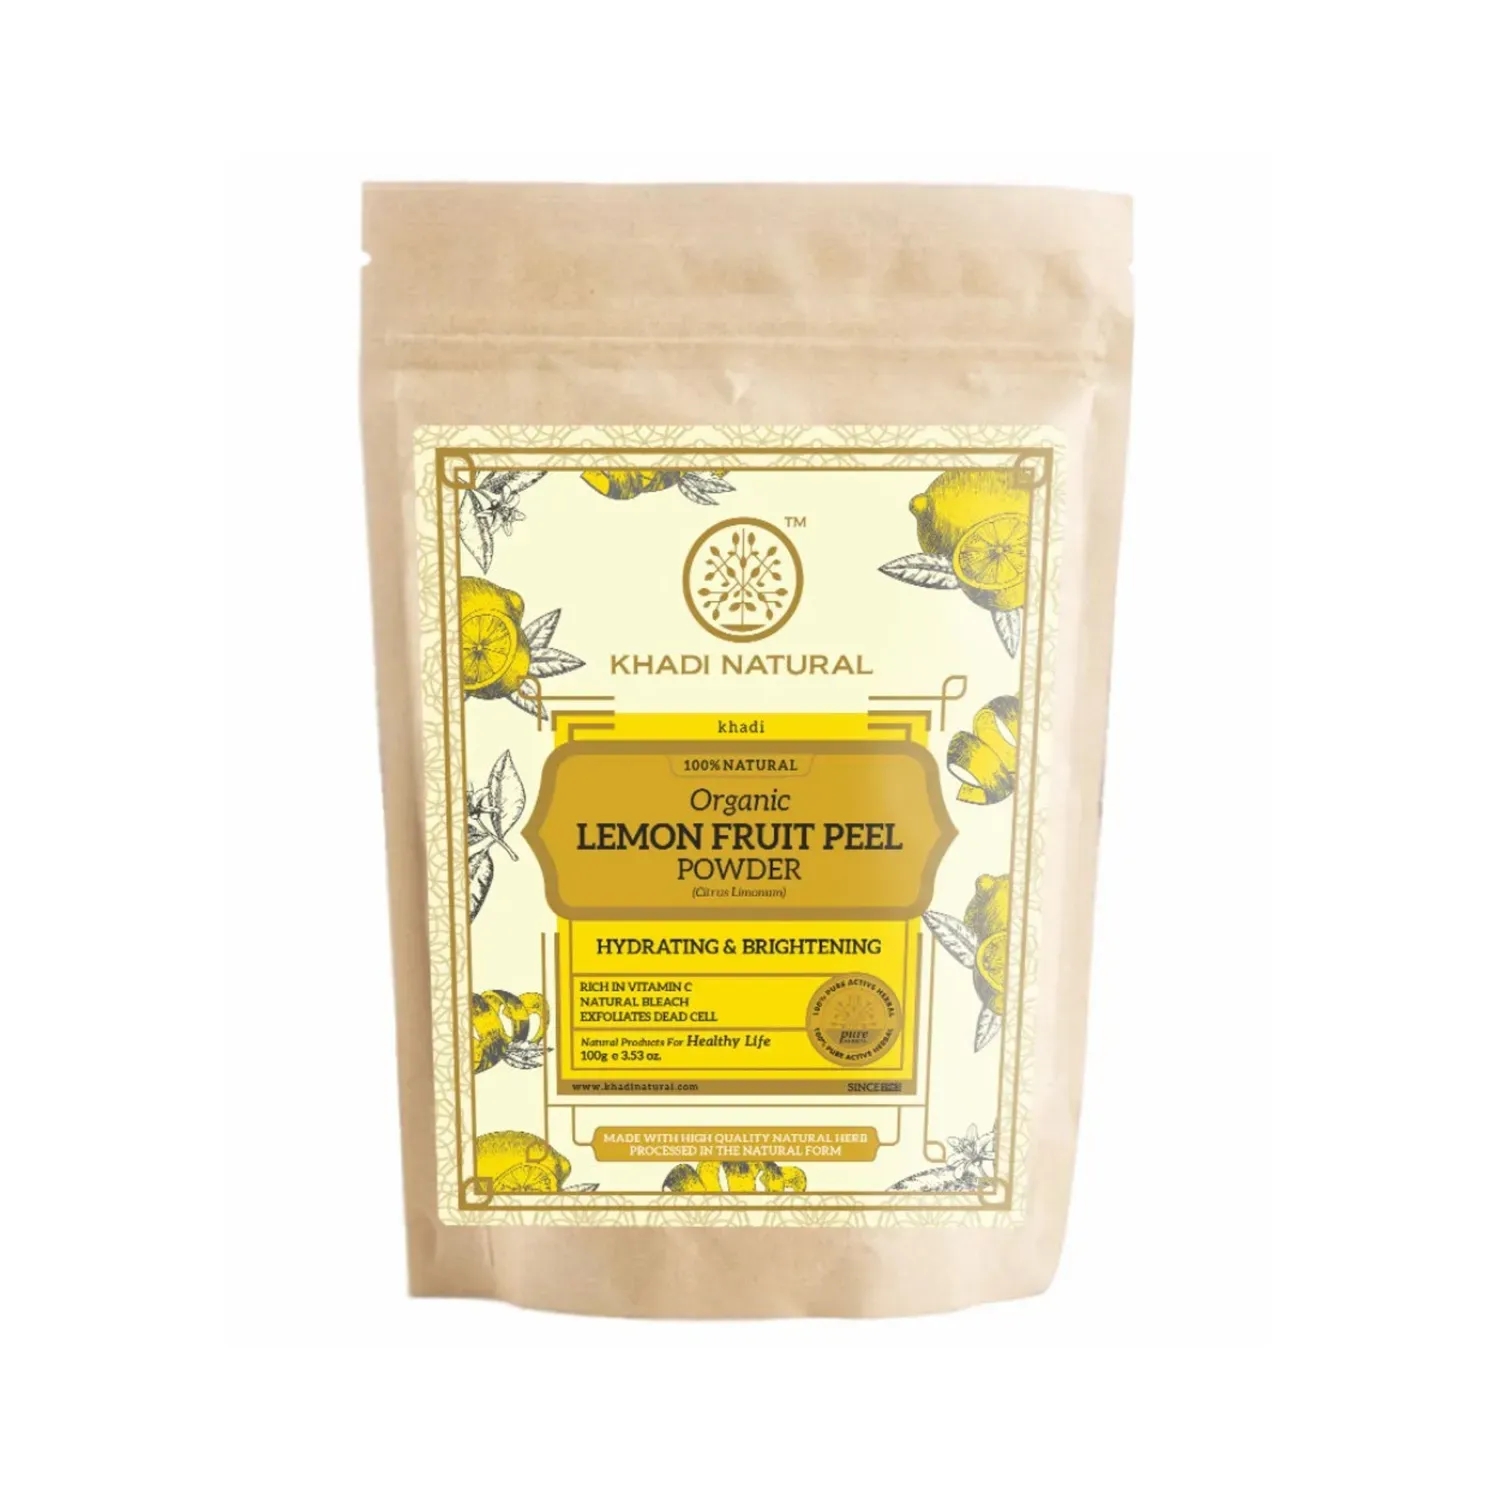 Khadi Natural Lemon Fruit Peel Organic Powder (100g)